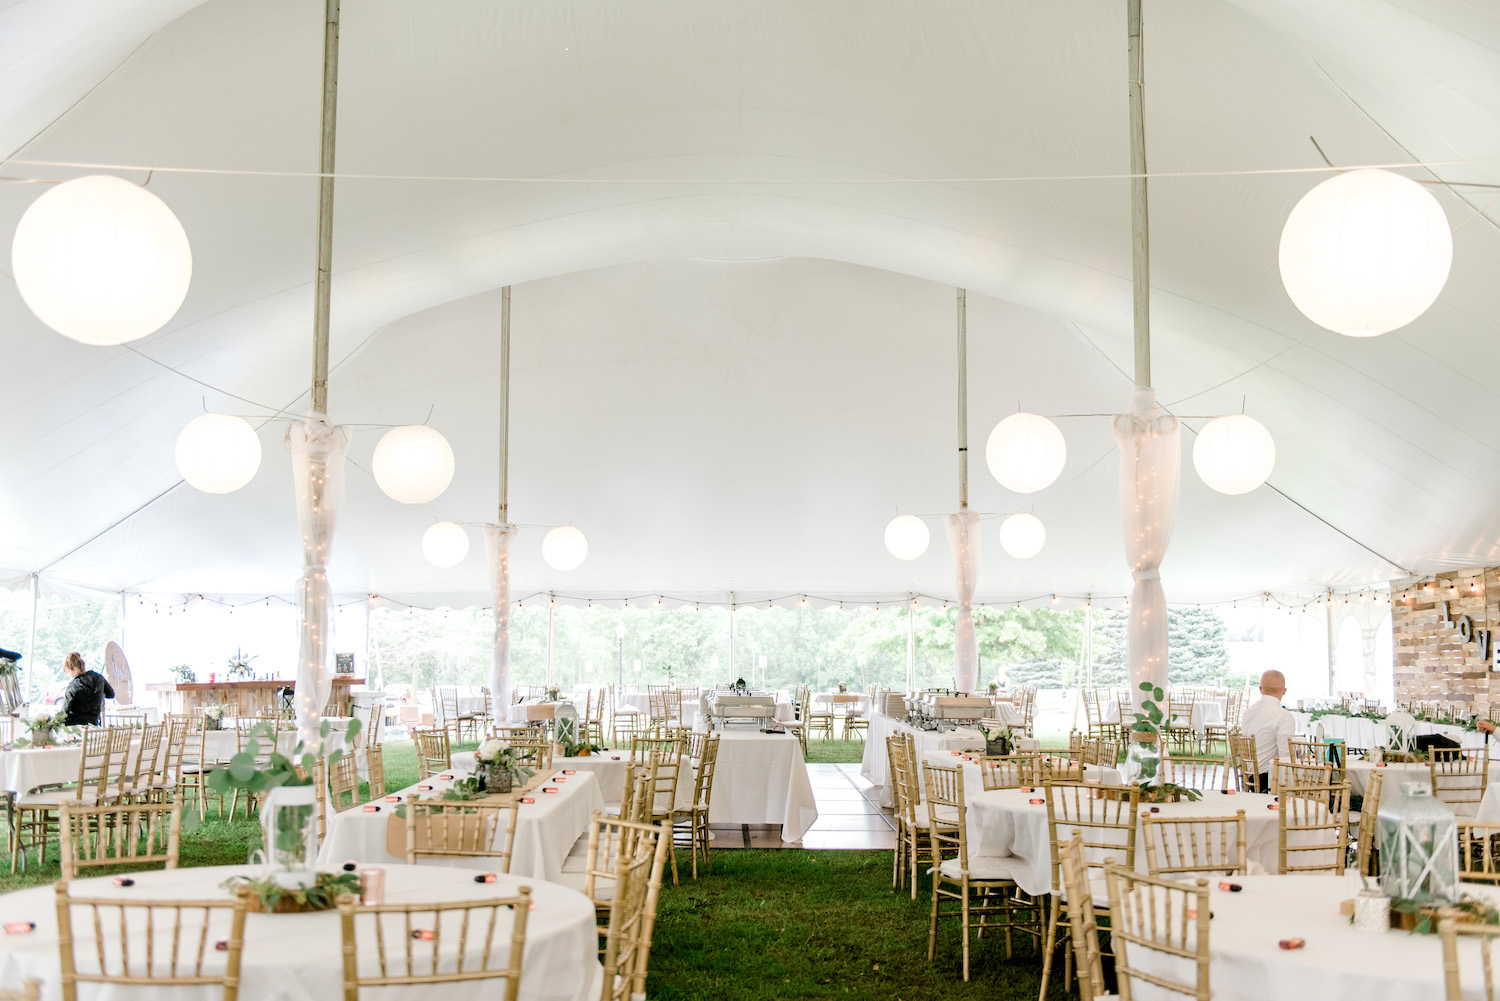 Wallinwood Springs Golf Course wedding tent setup